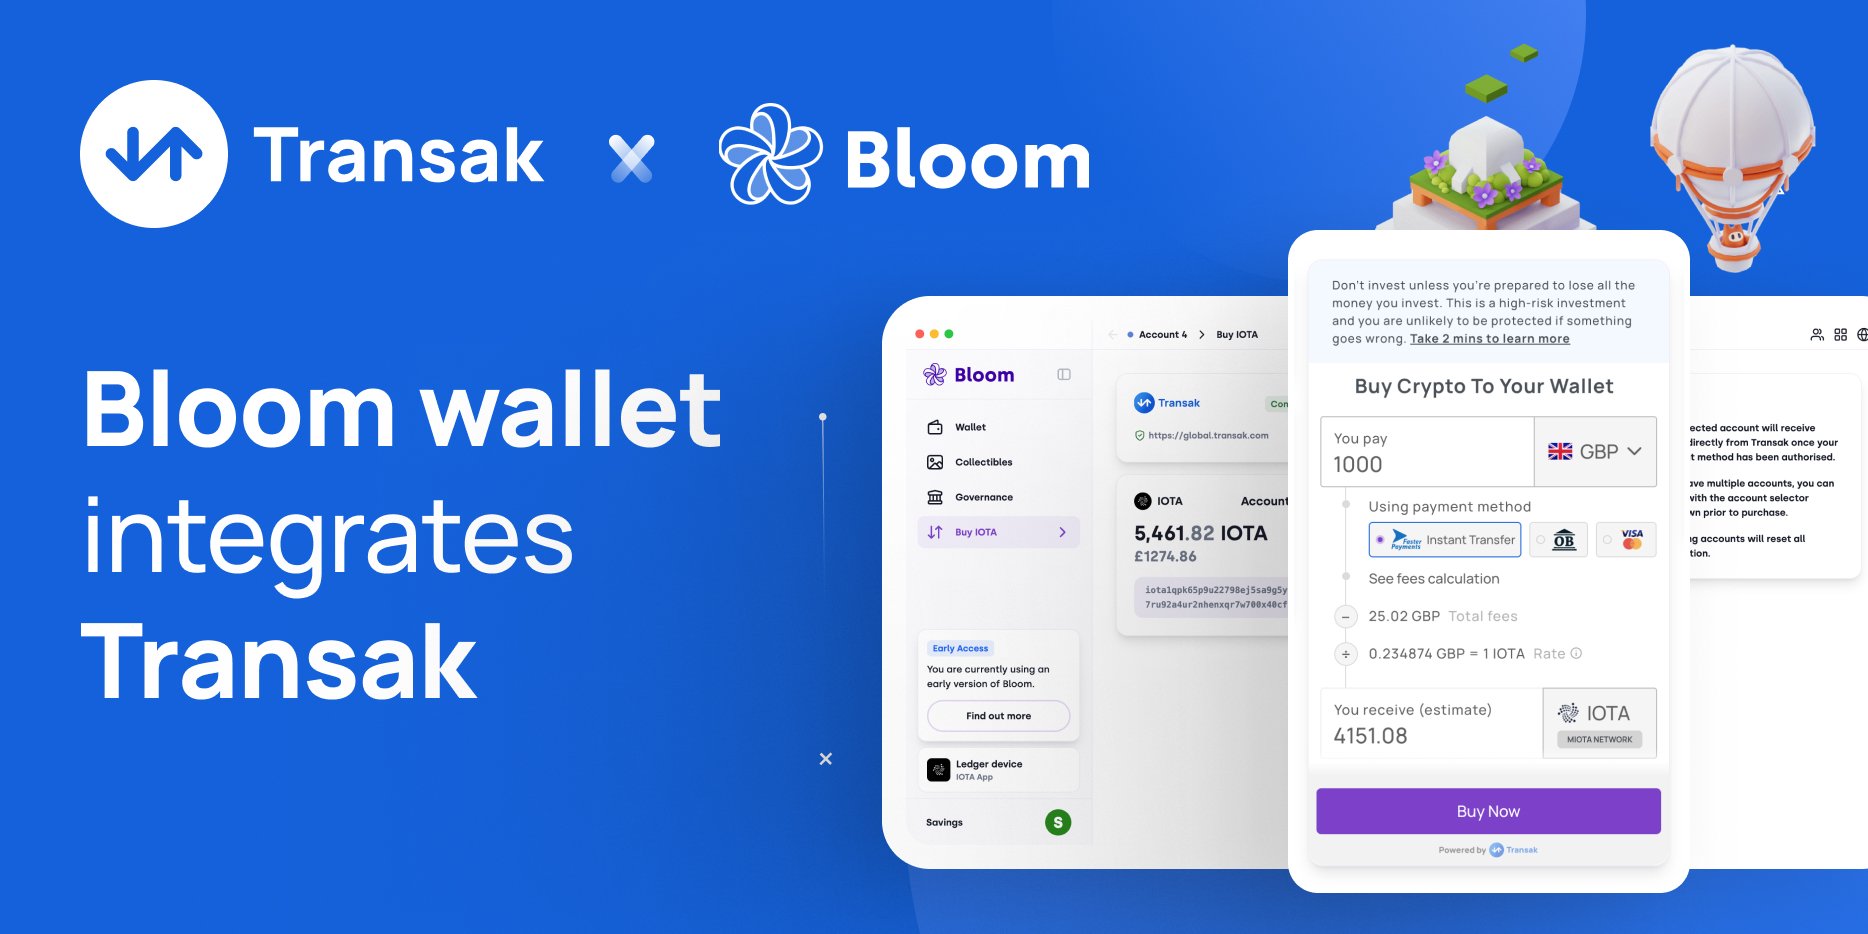 Transak x Bloom wallet